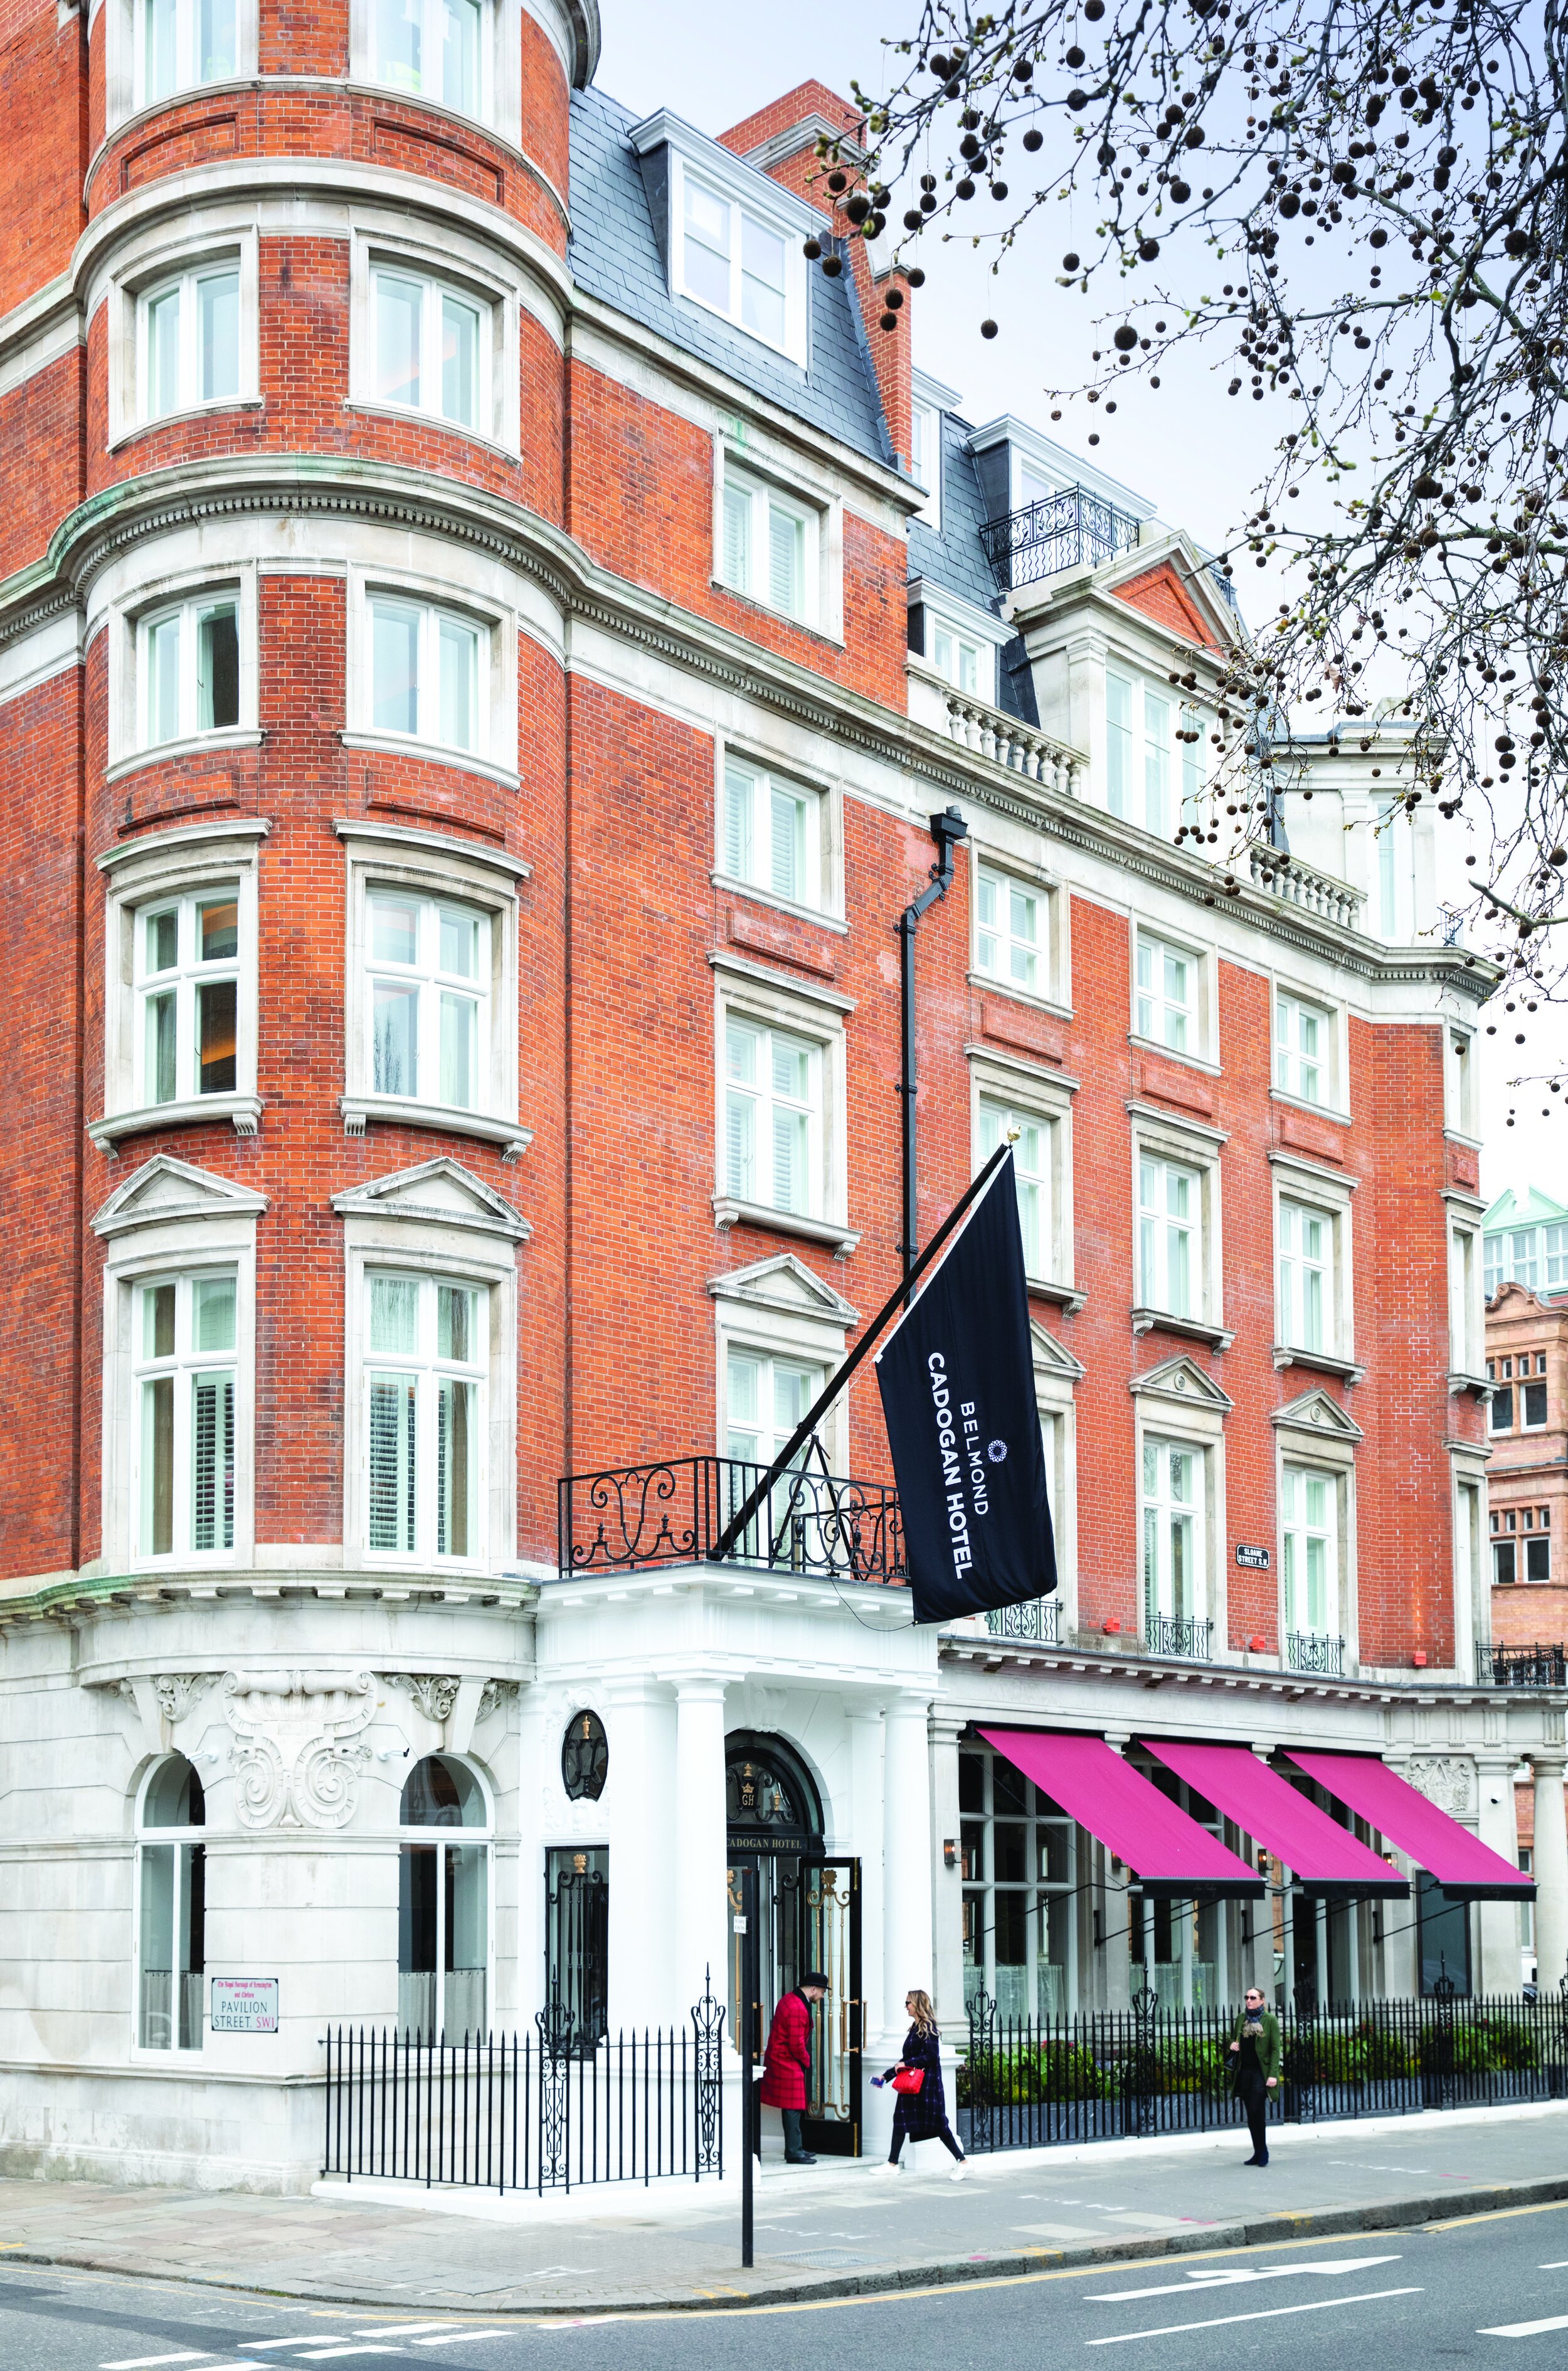 The Cadogan, A Belmond Hotel, London - Sloane Street